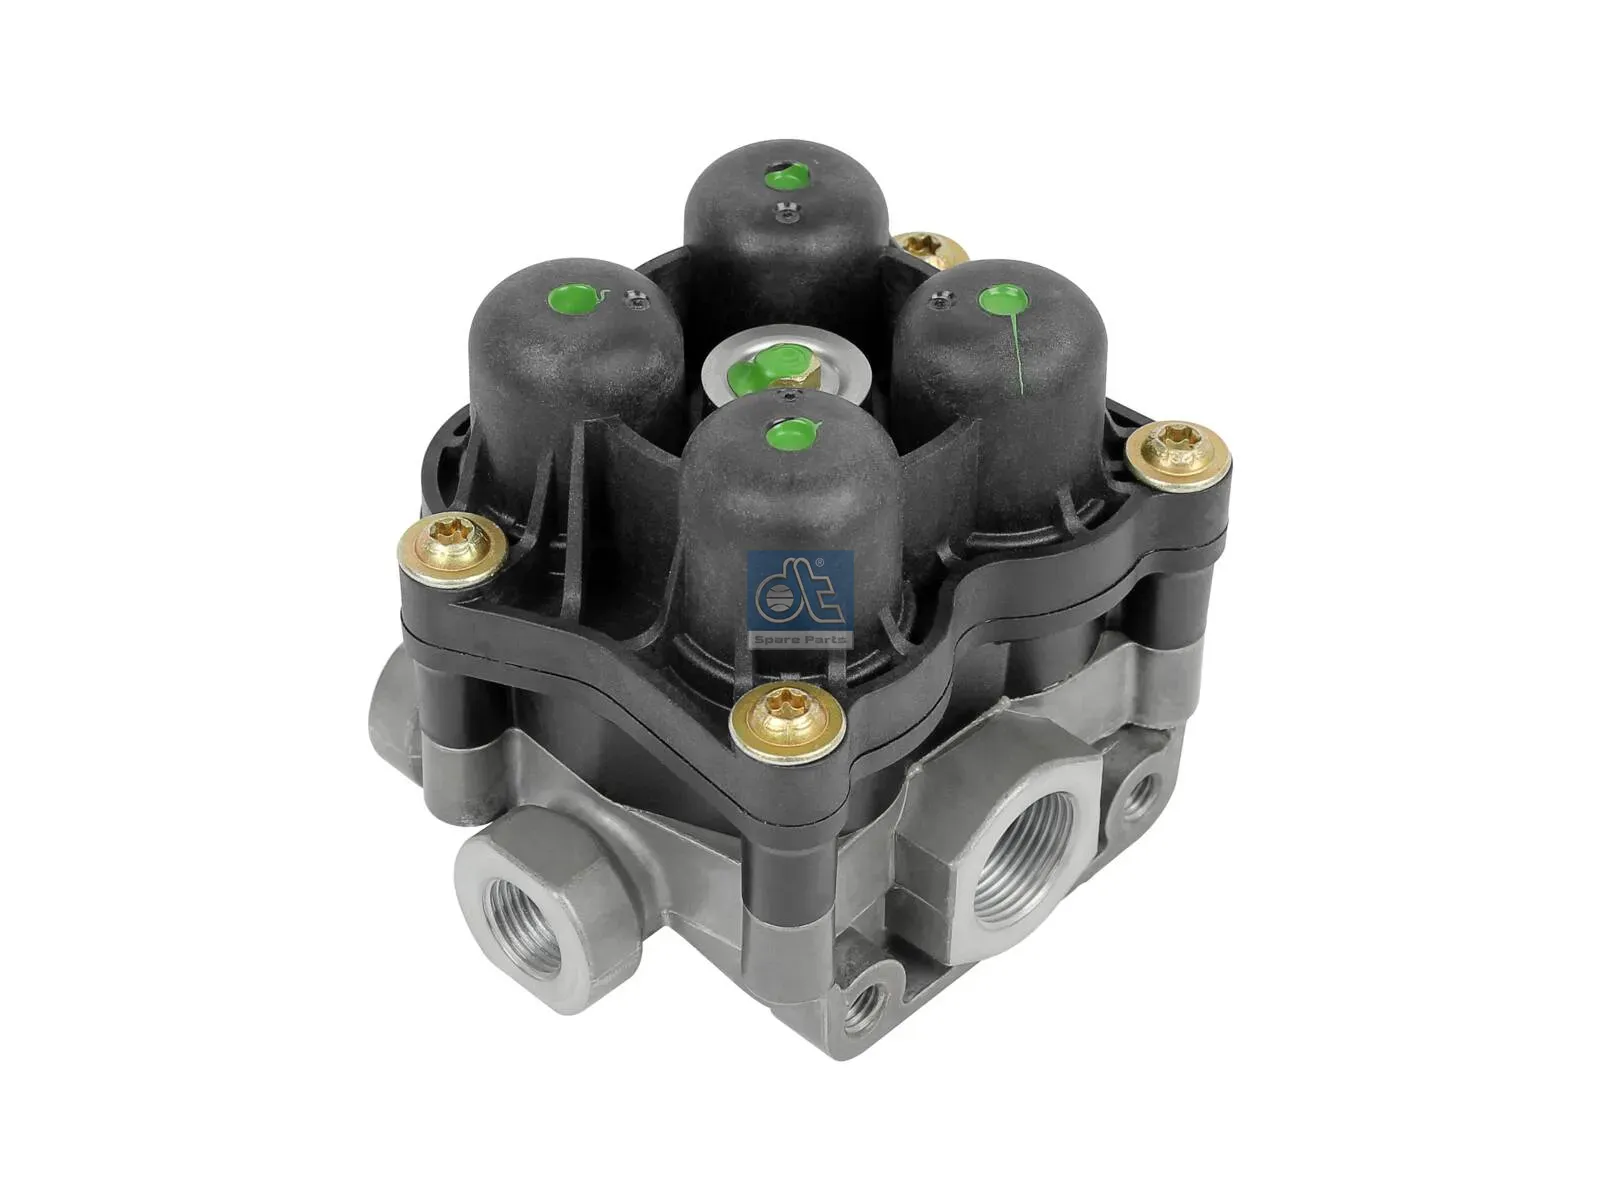 4-circuit-protection valve